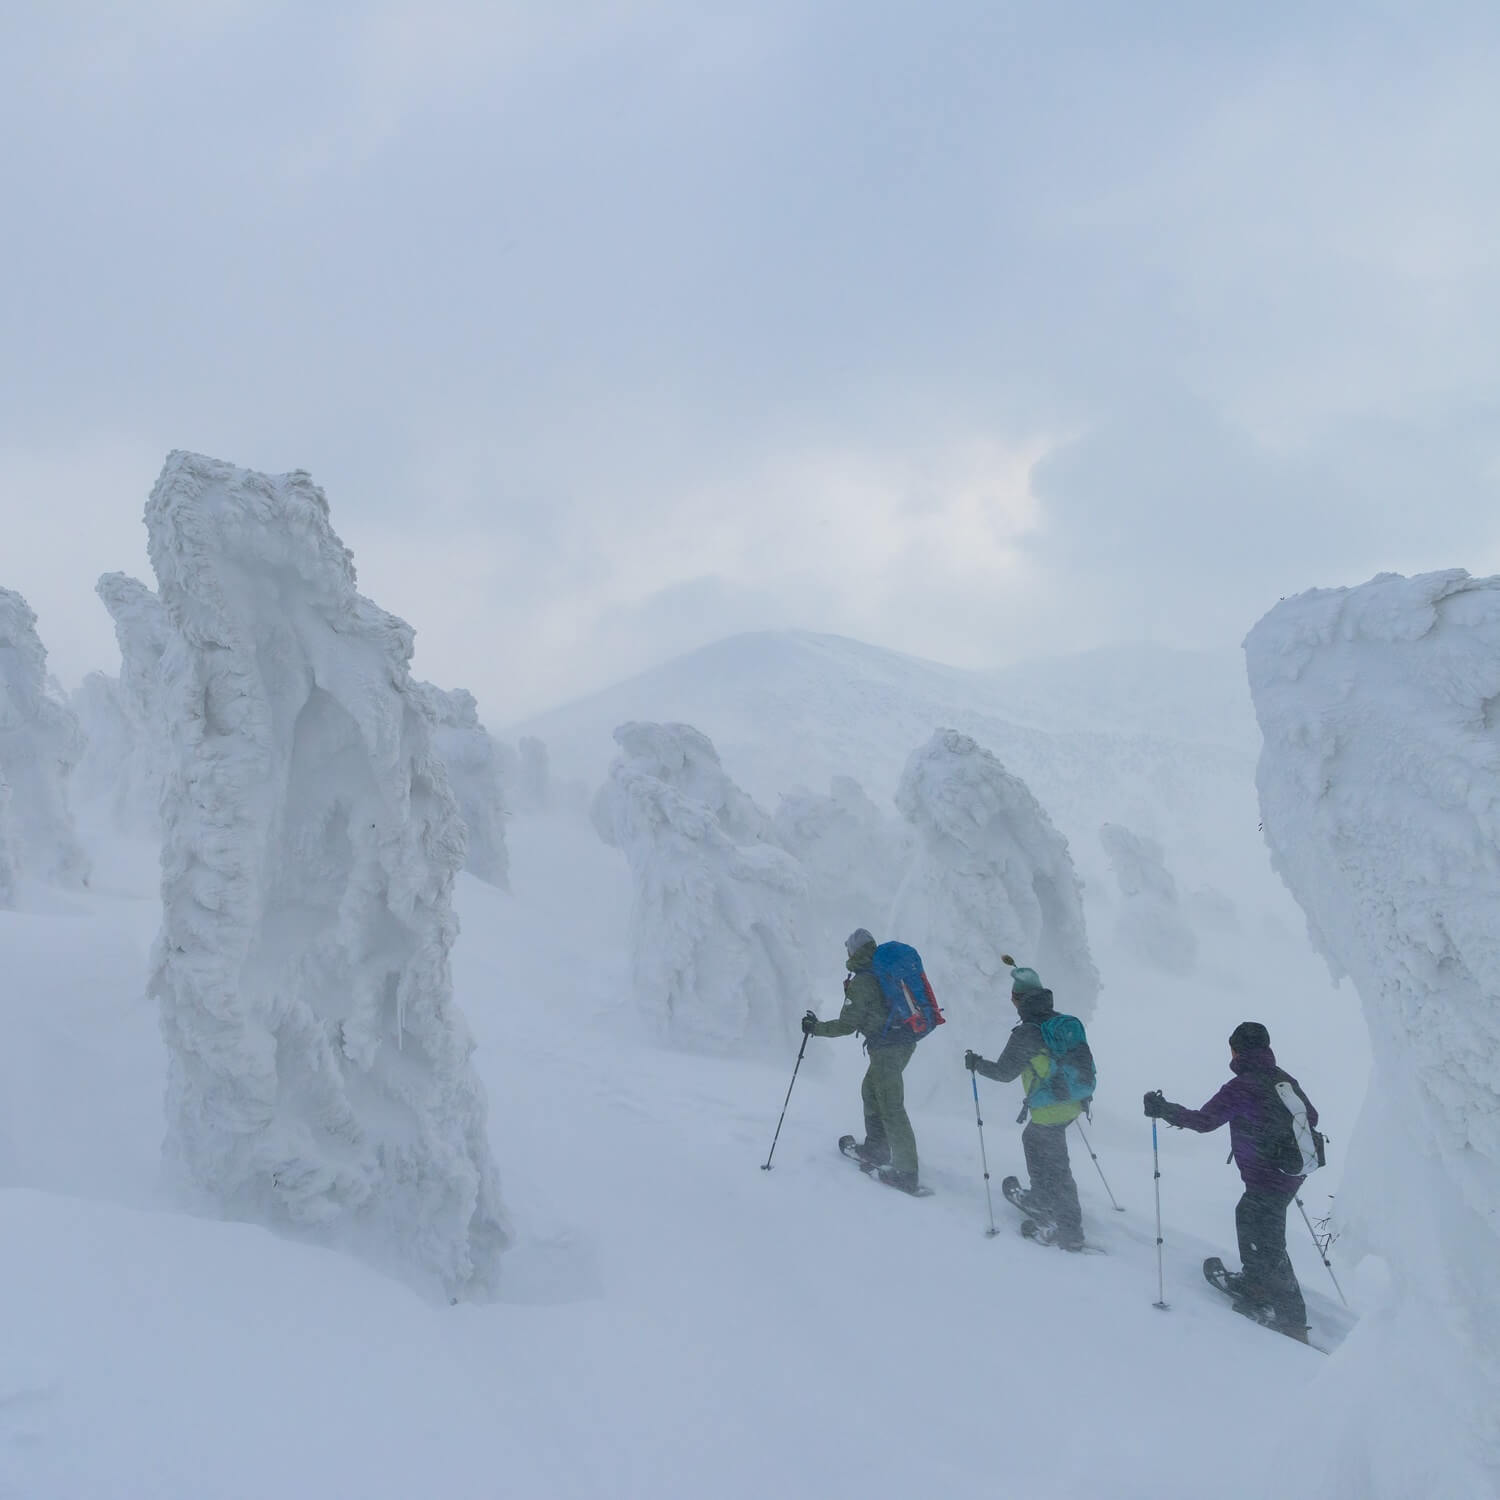 Hakkoda mountain in heavy snowfall, Aomori Prefecture, Japan = Shutterstock 5